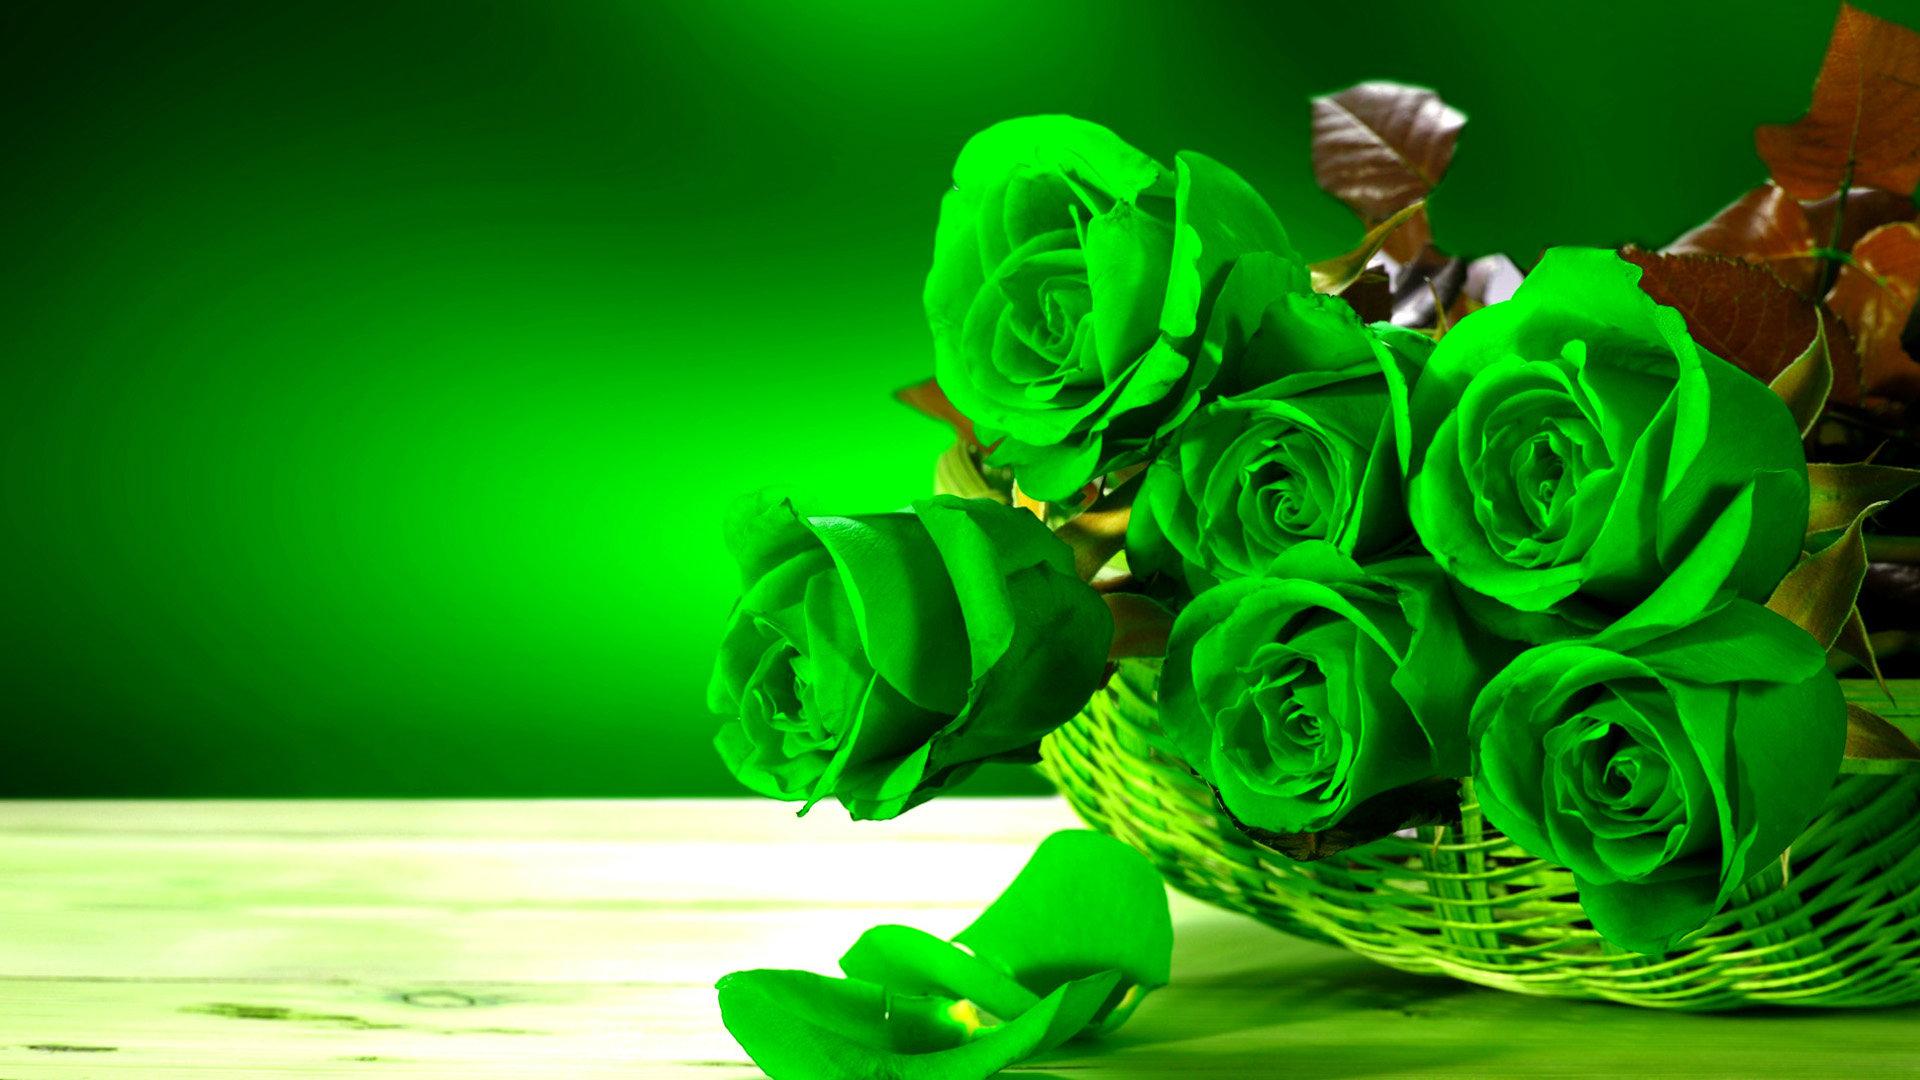 Green Flowers Desktop Wallpapers on WallpaperDog